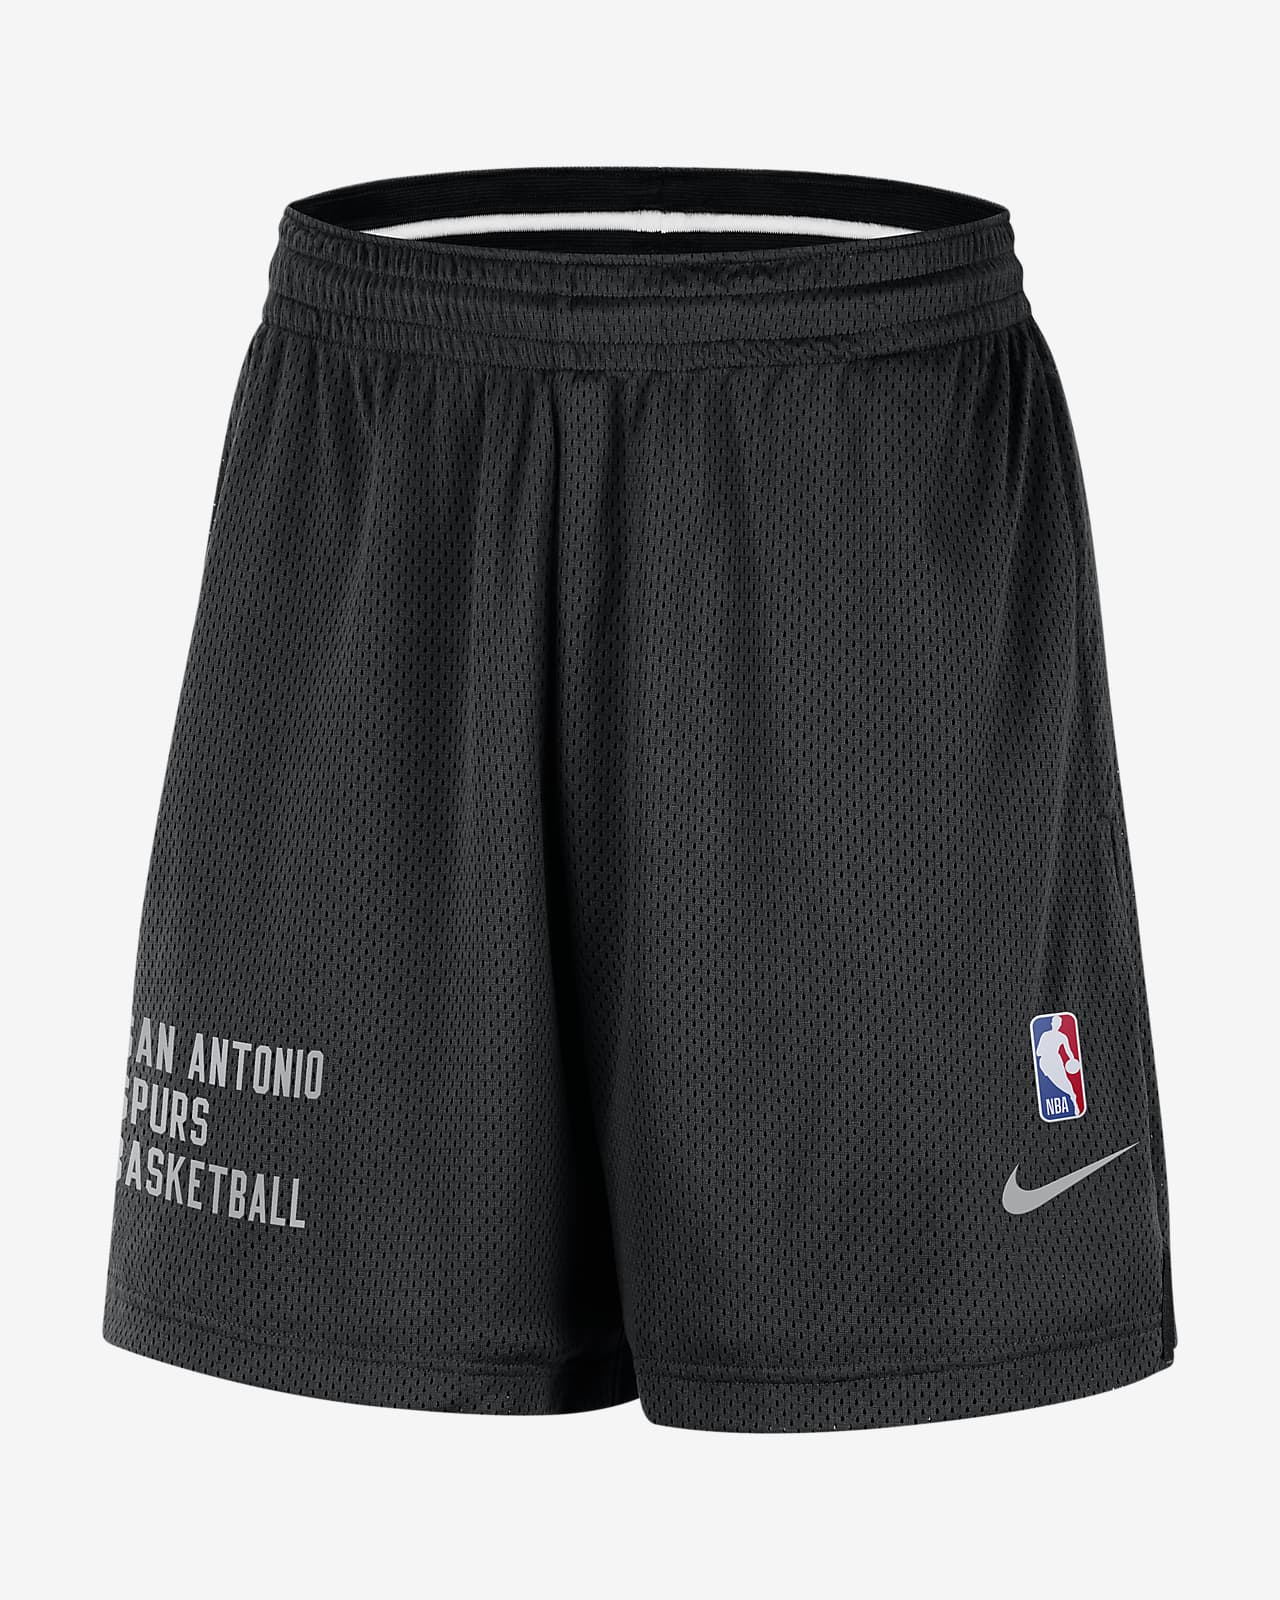 San Antonio Spurs Men's Nike NBA Mesh Shorts